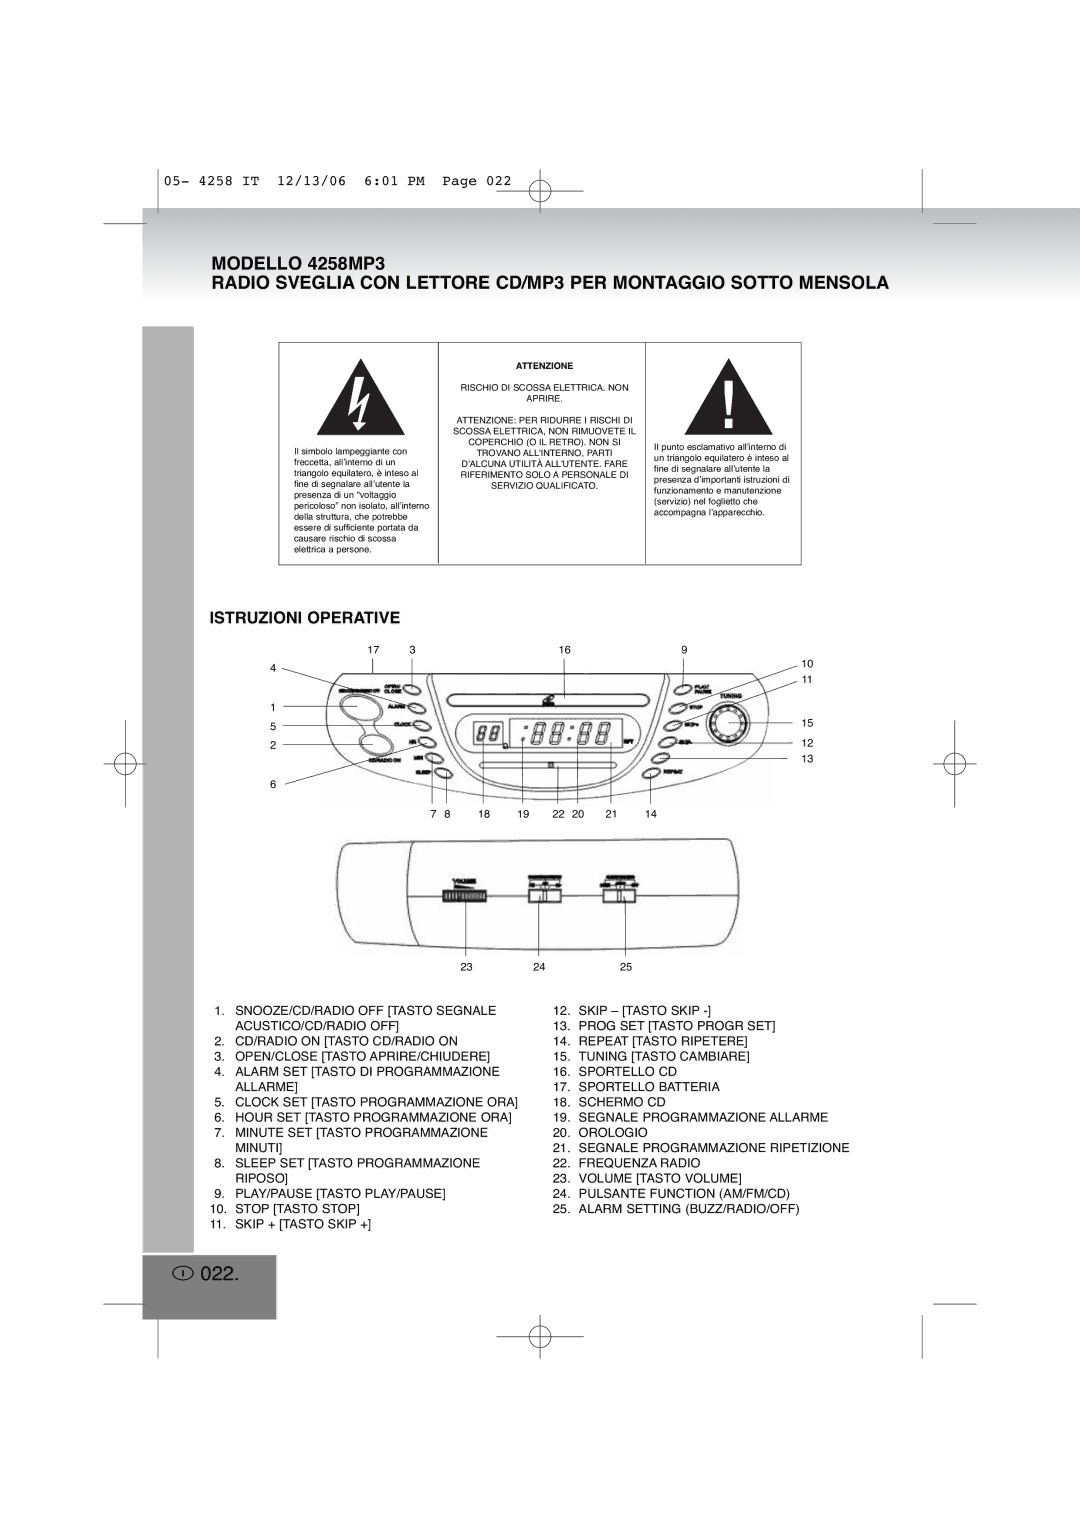 Elta 4258MP3 manual 022, Istruzioni Operative 